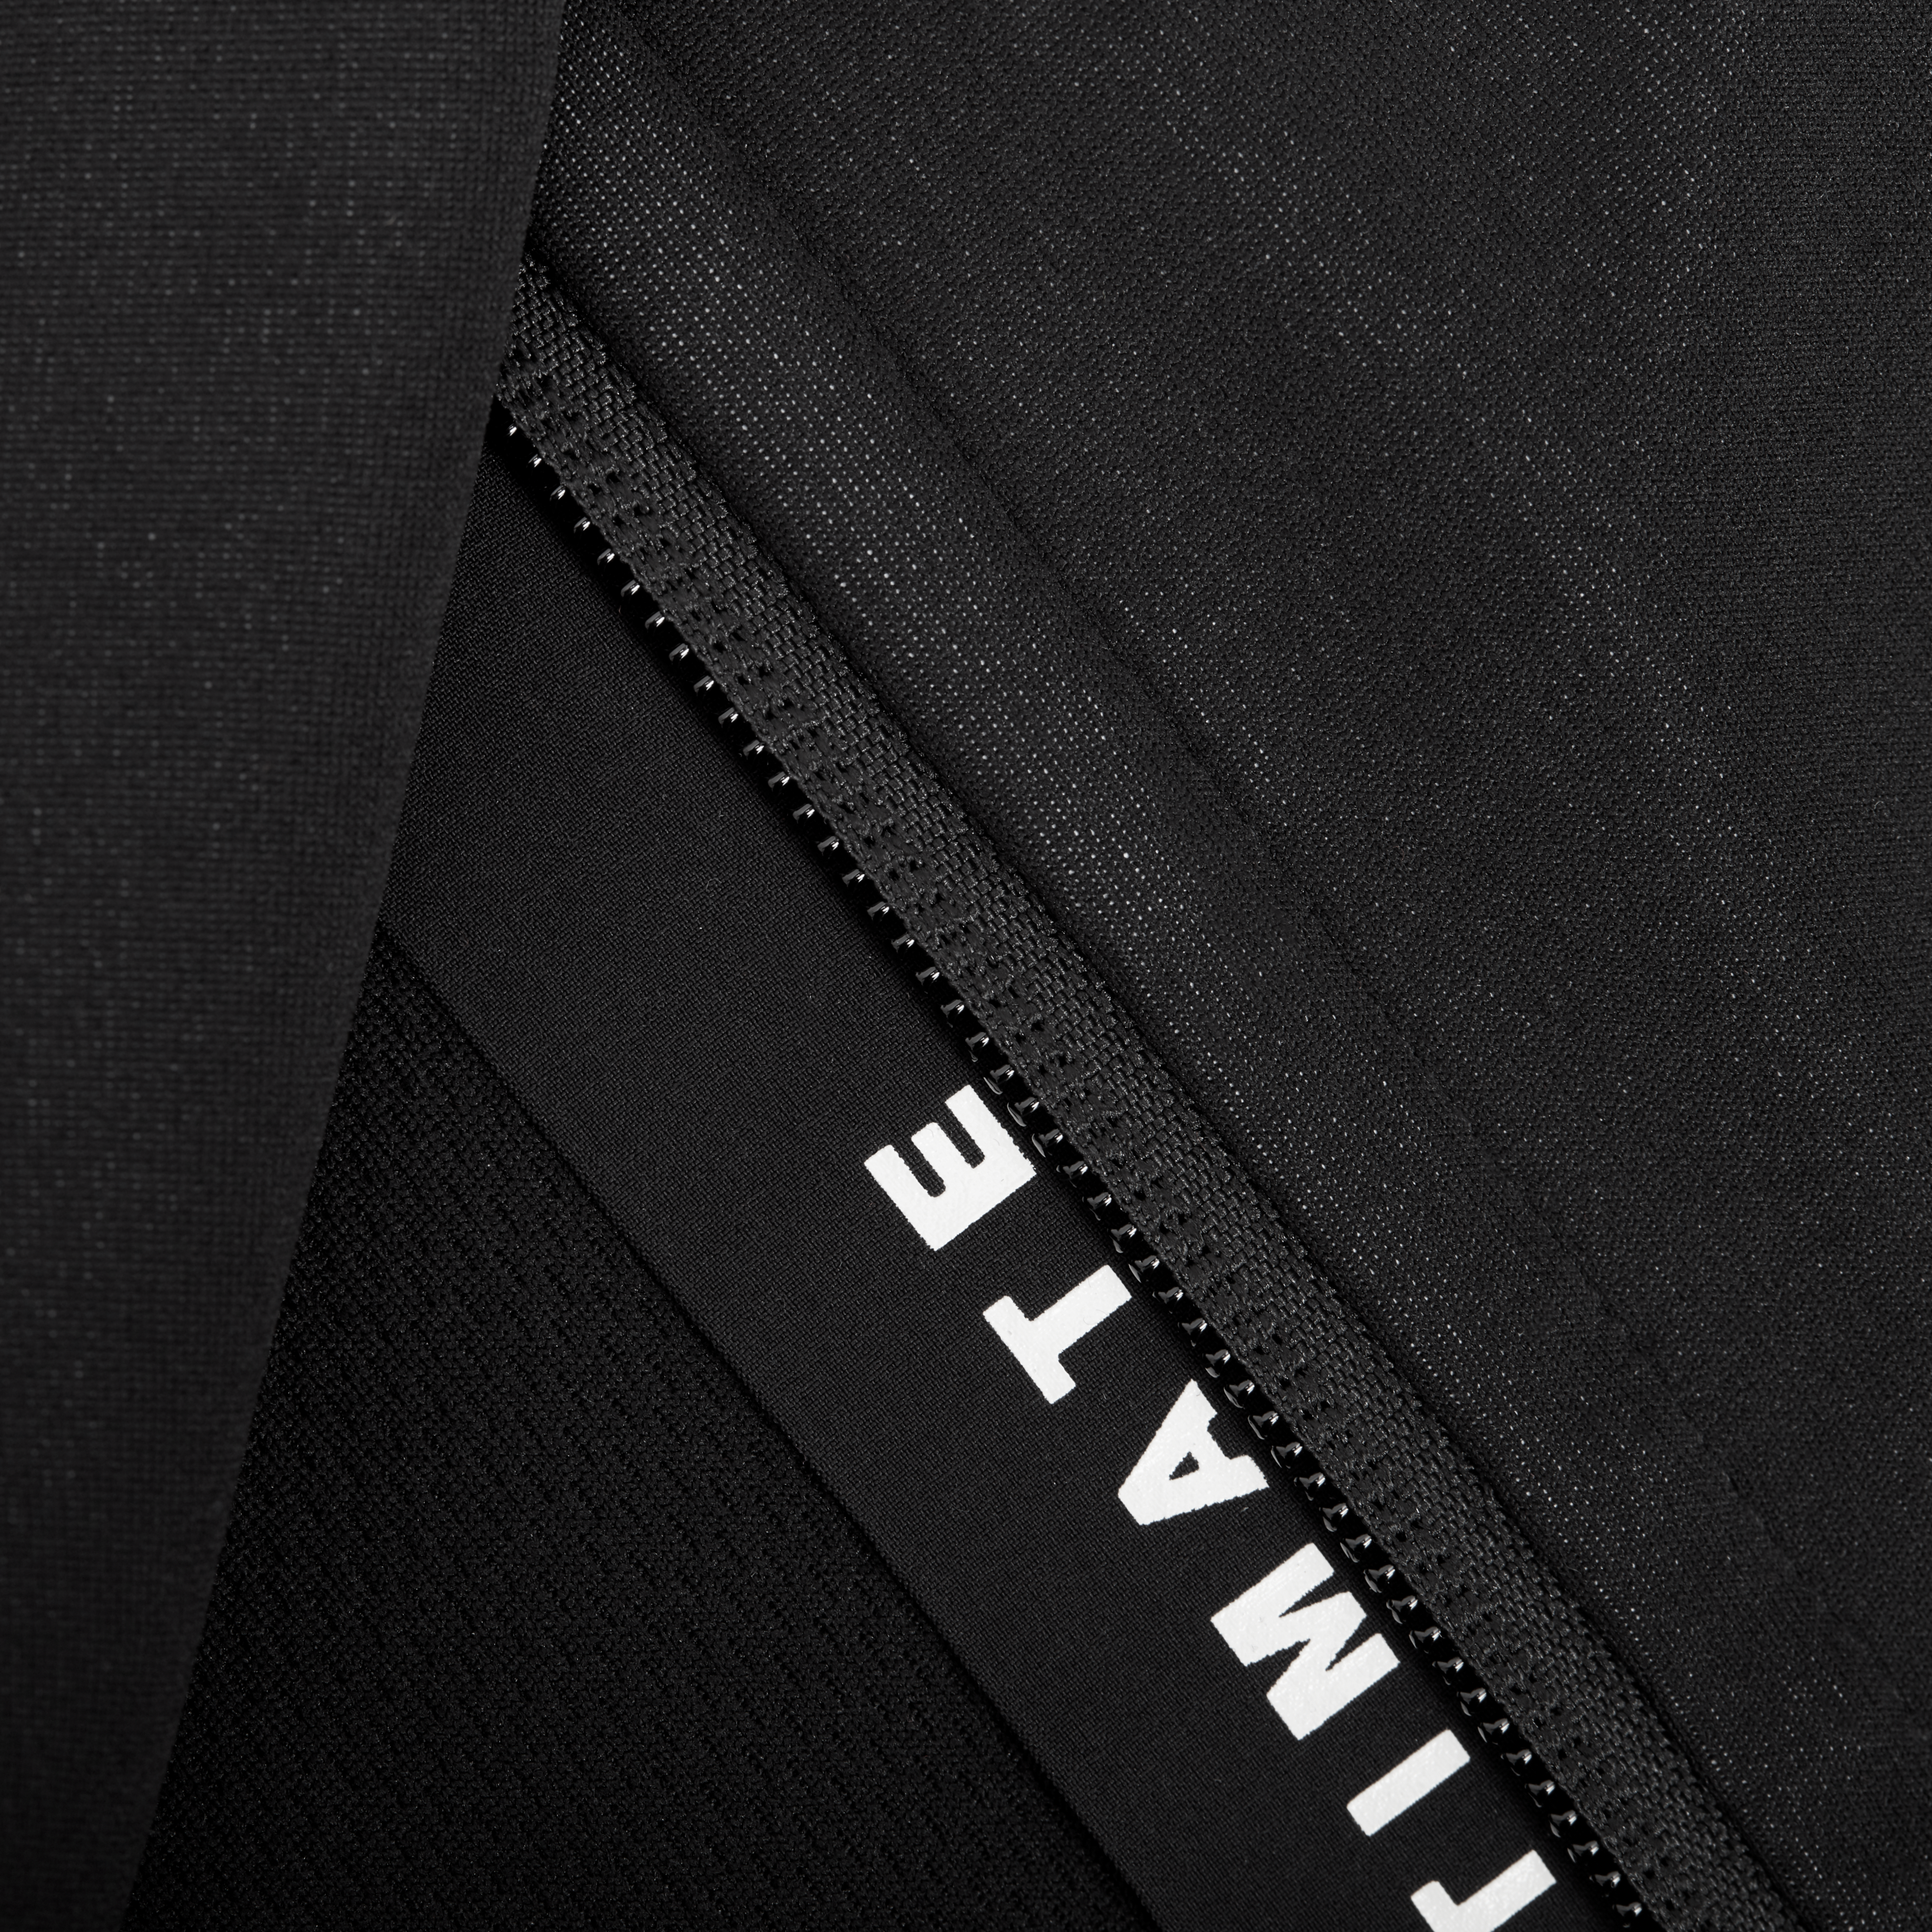 Ultimate VII SO Hooded Jacket Women product image